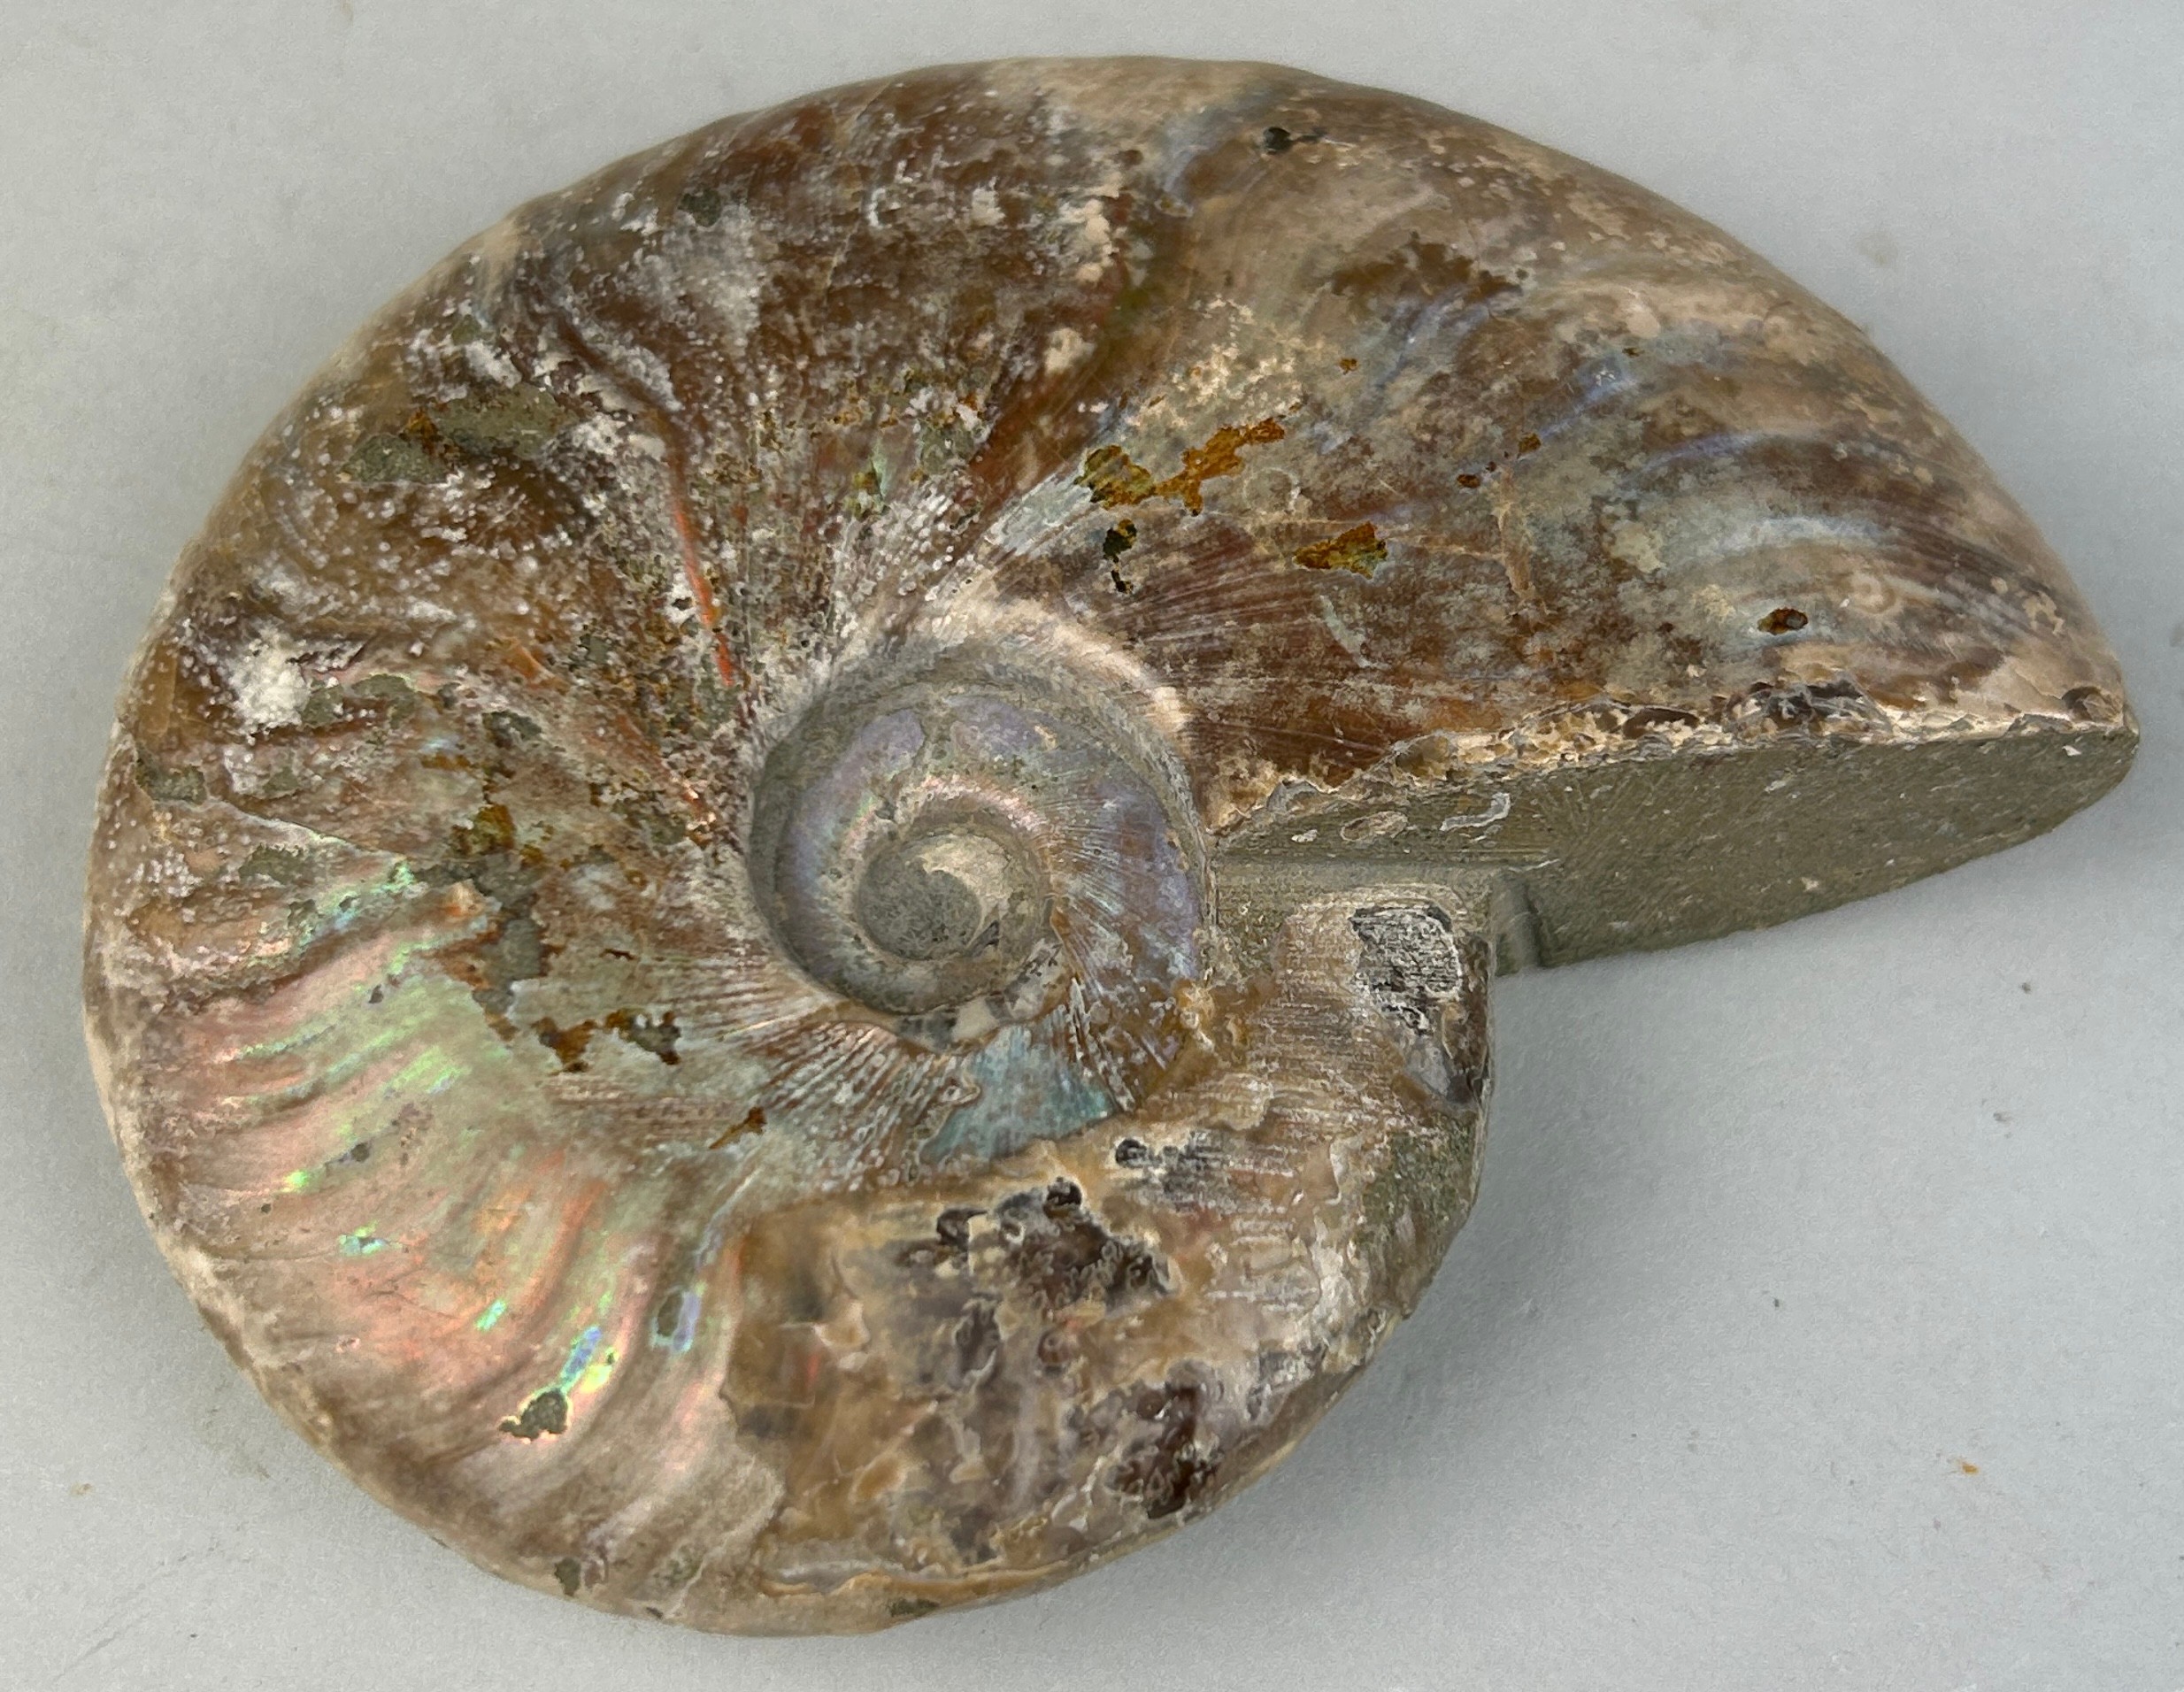 AN OPALISED CLEONICERAS AMMONITE FOSSIL 10cm x 8cm Ammonite From the Majunga Basin, Madagascar. - Image 3 of 3